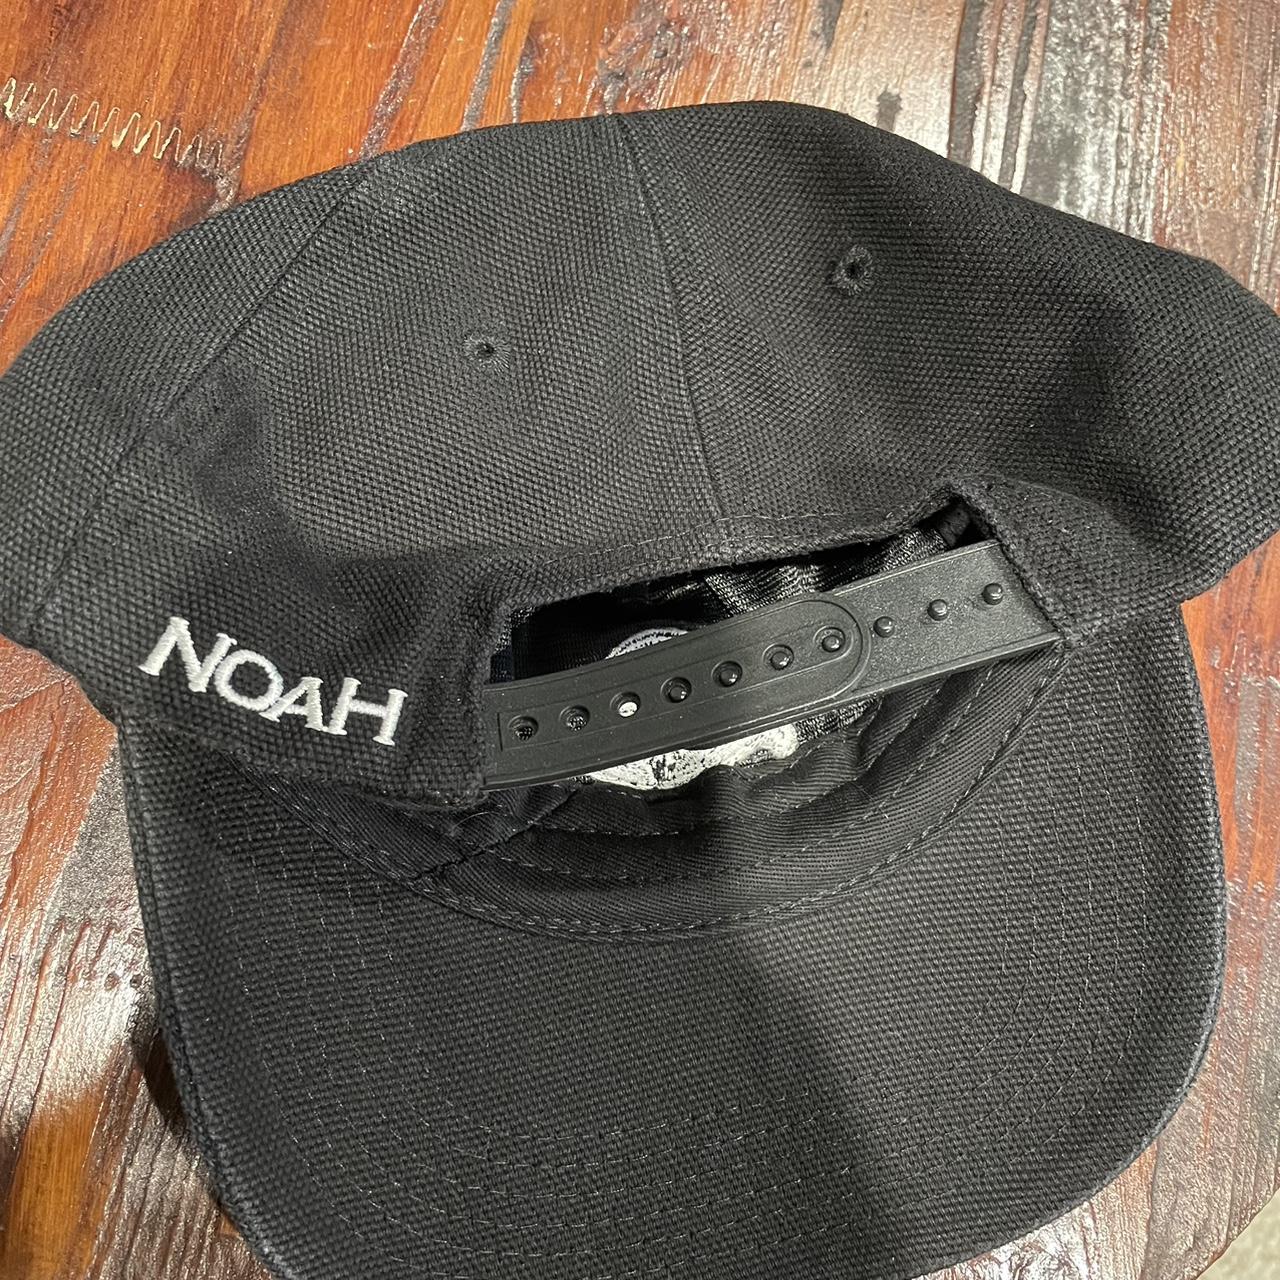 Noah Men's Black and White Hat (2)